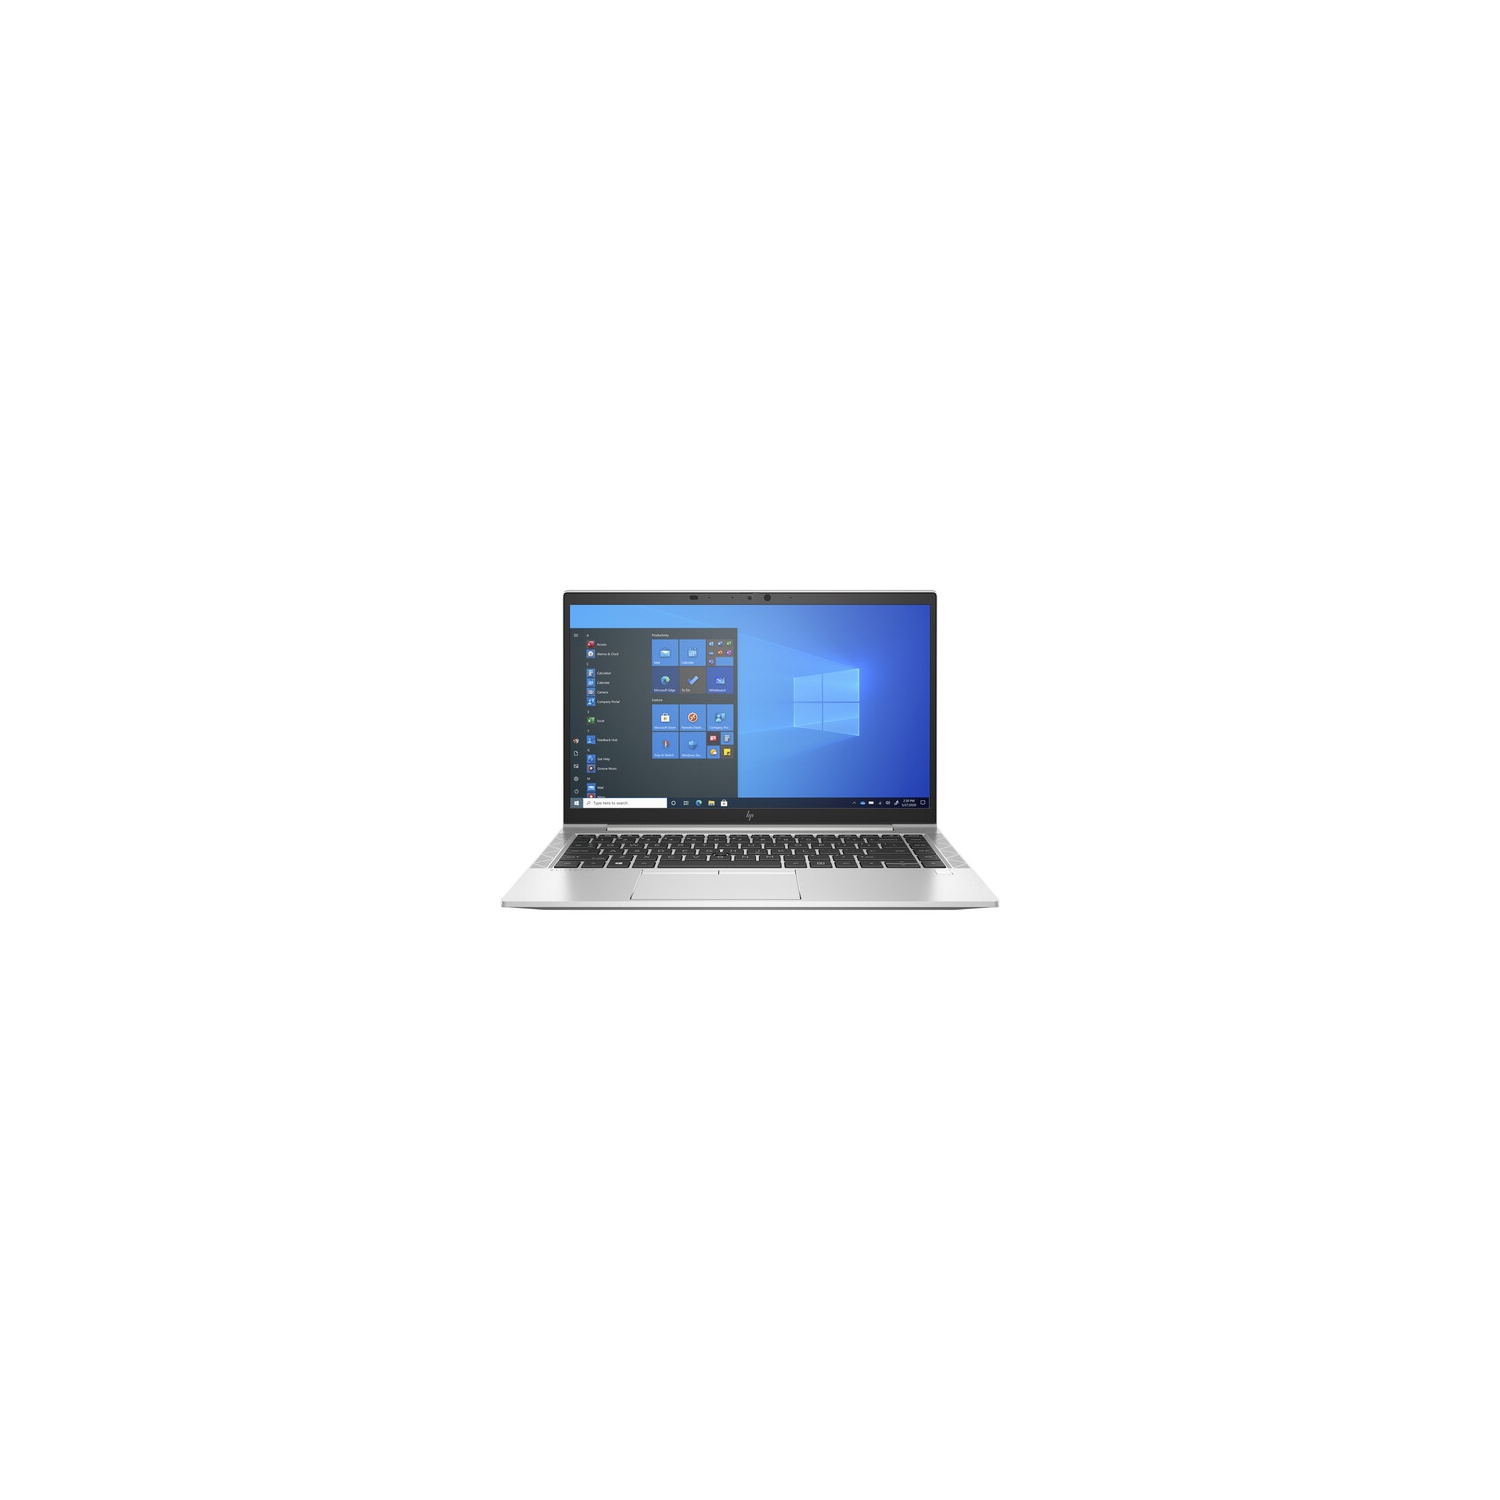 Intel Dual-Core i5-4300U up to 2.9GHz USB 3.0 500GB HDD Window 10 Professional Renewed Bluetooth 8GB RAM HP 2018 Elitebook 840 G1 14 HD LED-backlit anti-glare Laptop Computer 